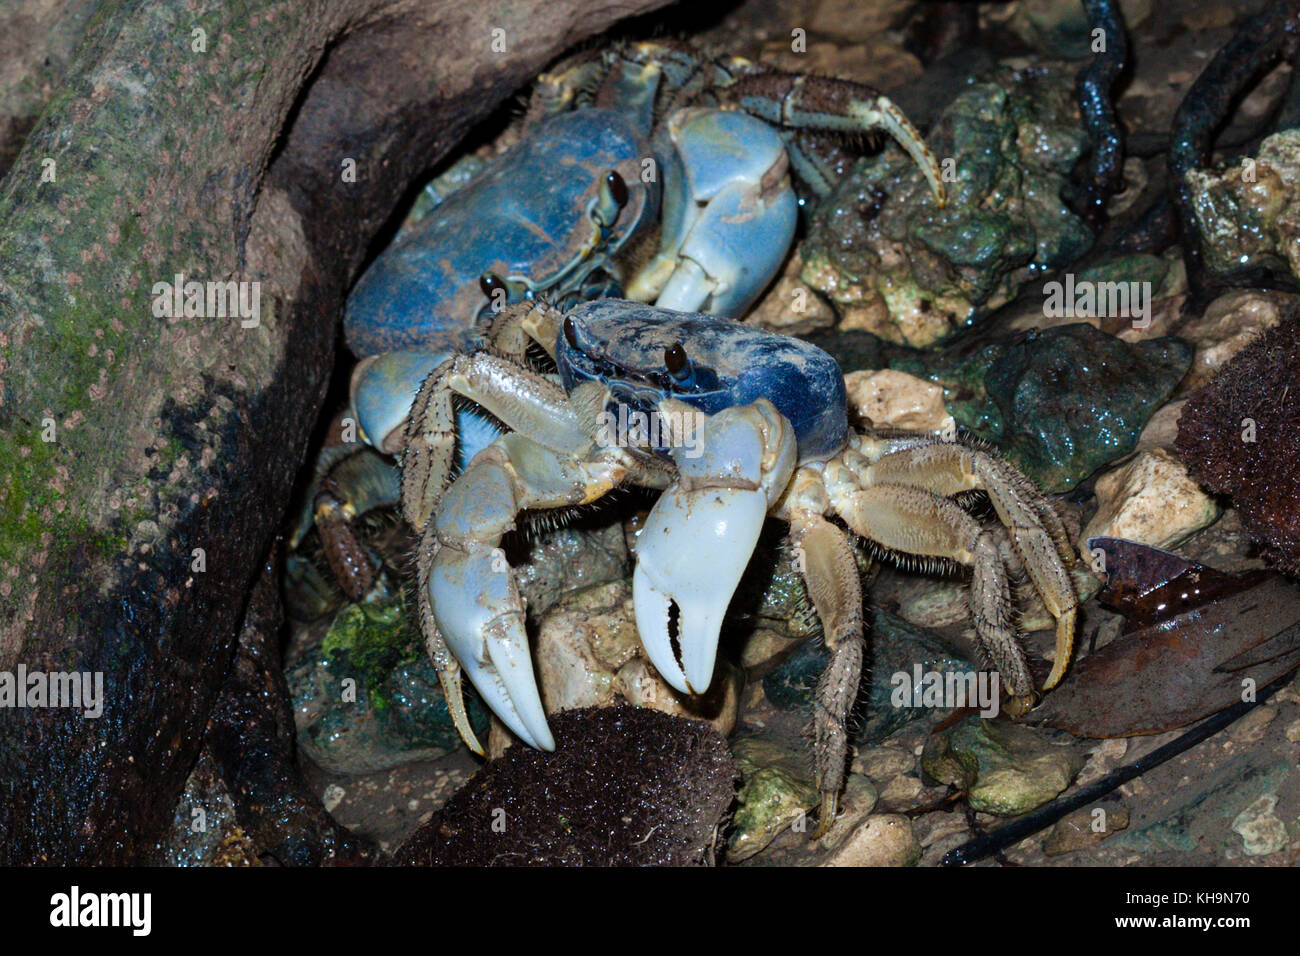 Christmas Island Blue Crab, Discoplax celeste, Christmas Island, Australia Stock Photo